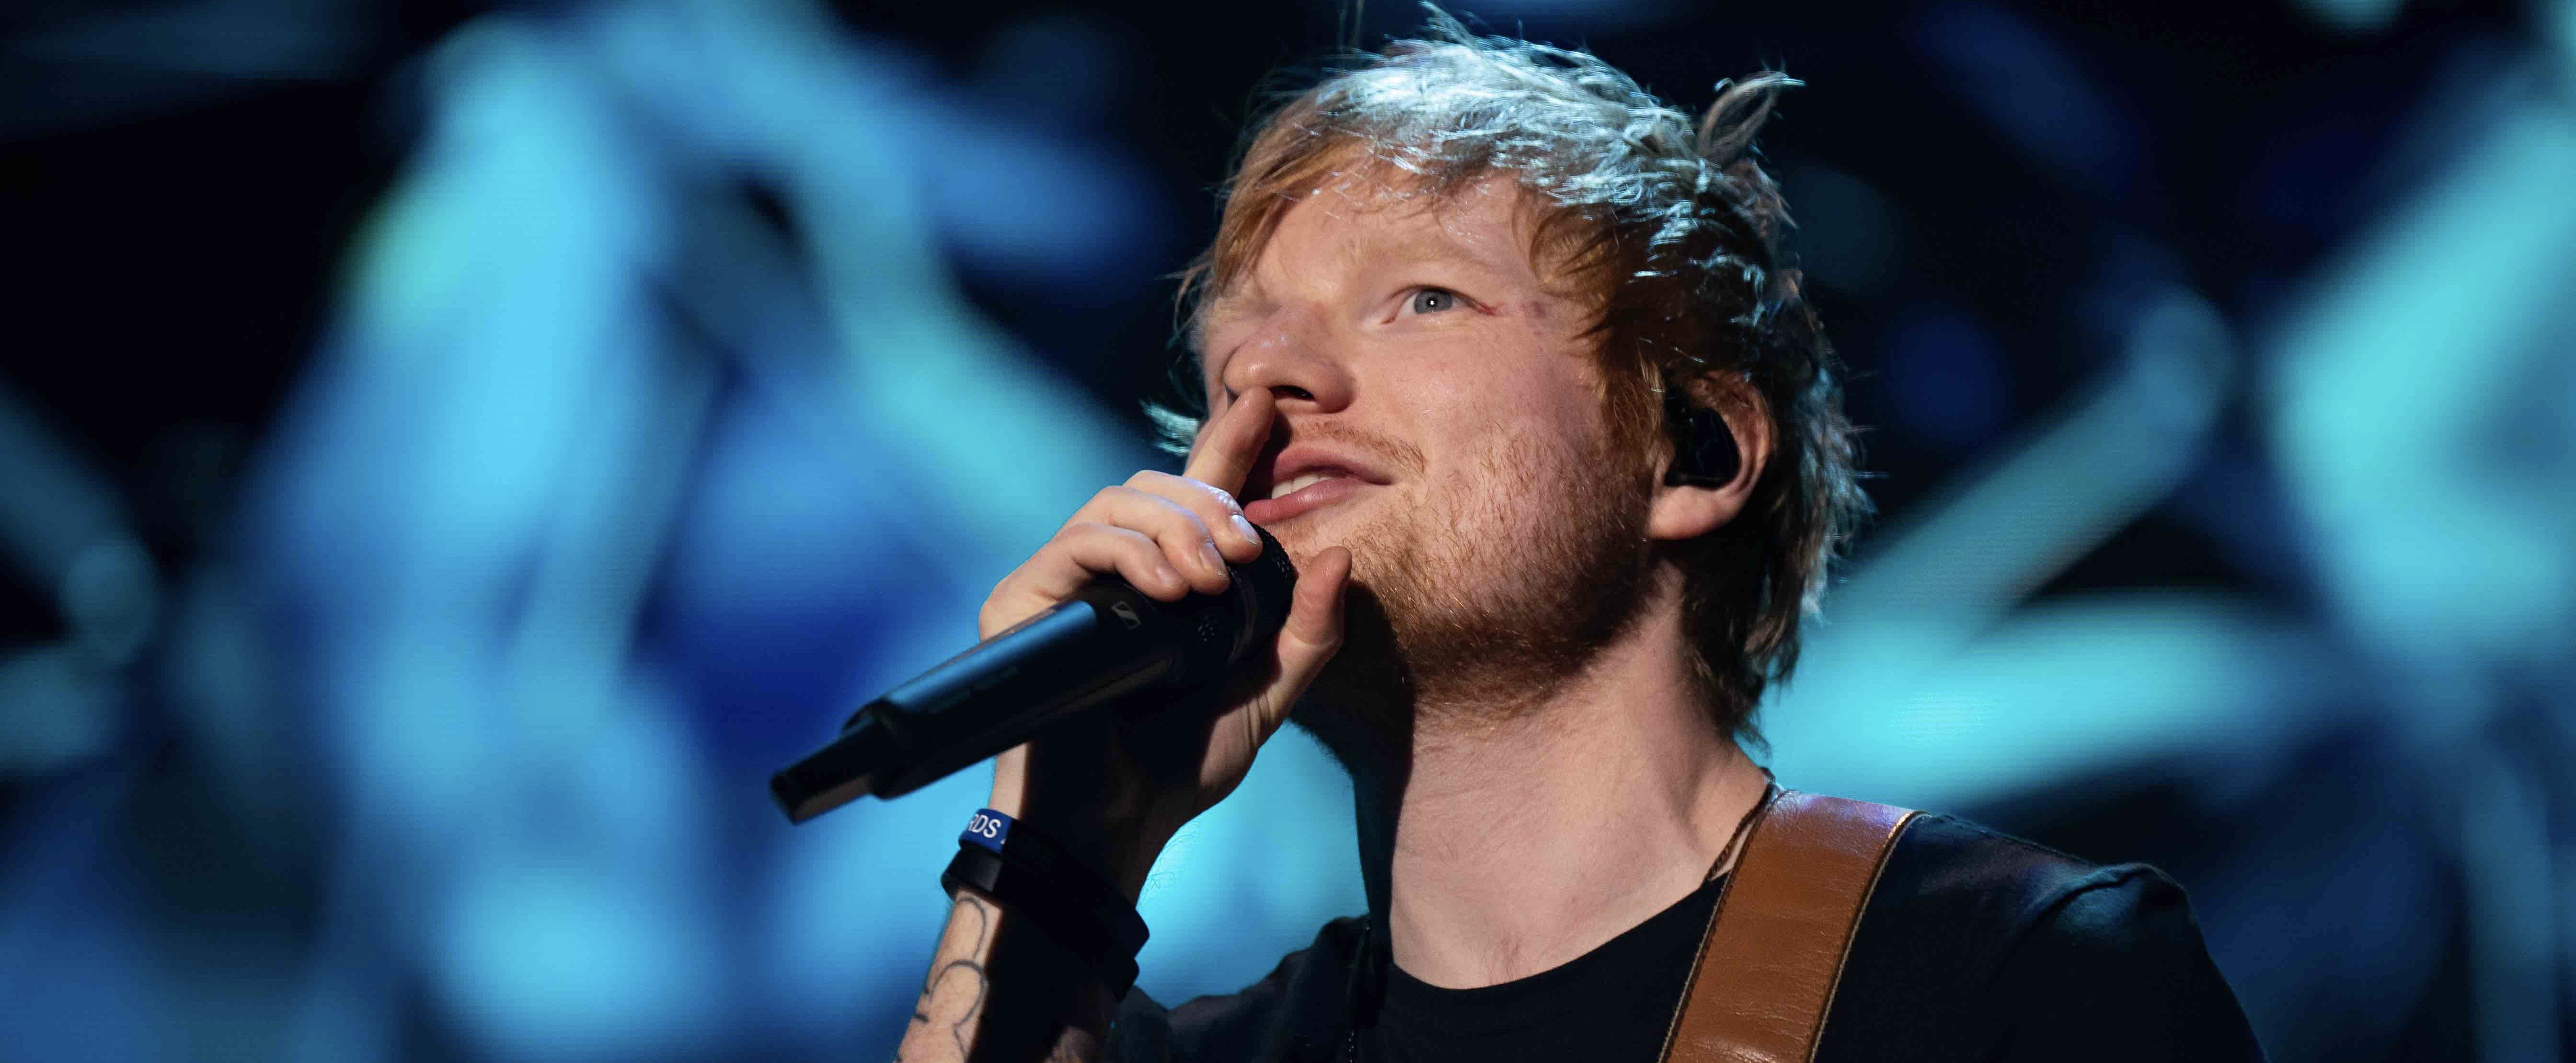 Ed Sheeran terug op social media na 'turbulente dingen' in privéleven